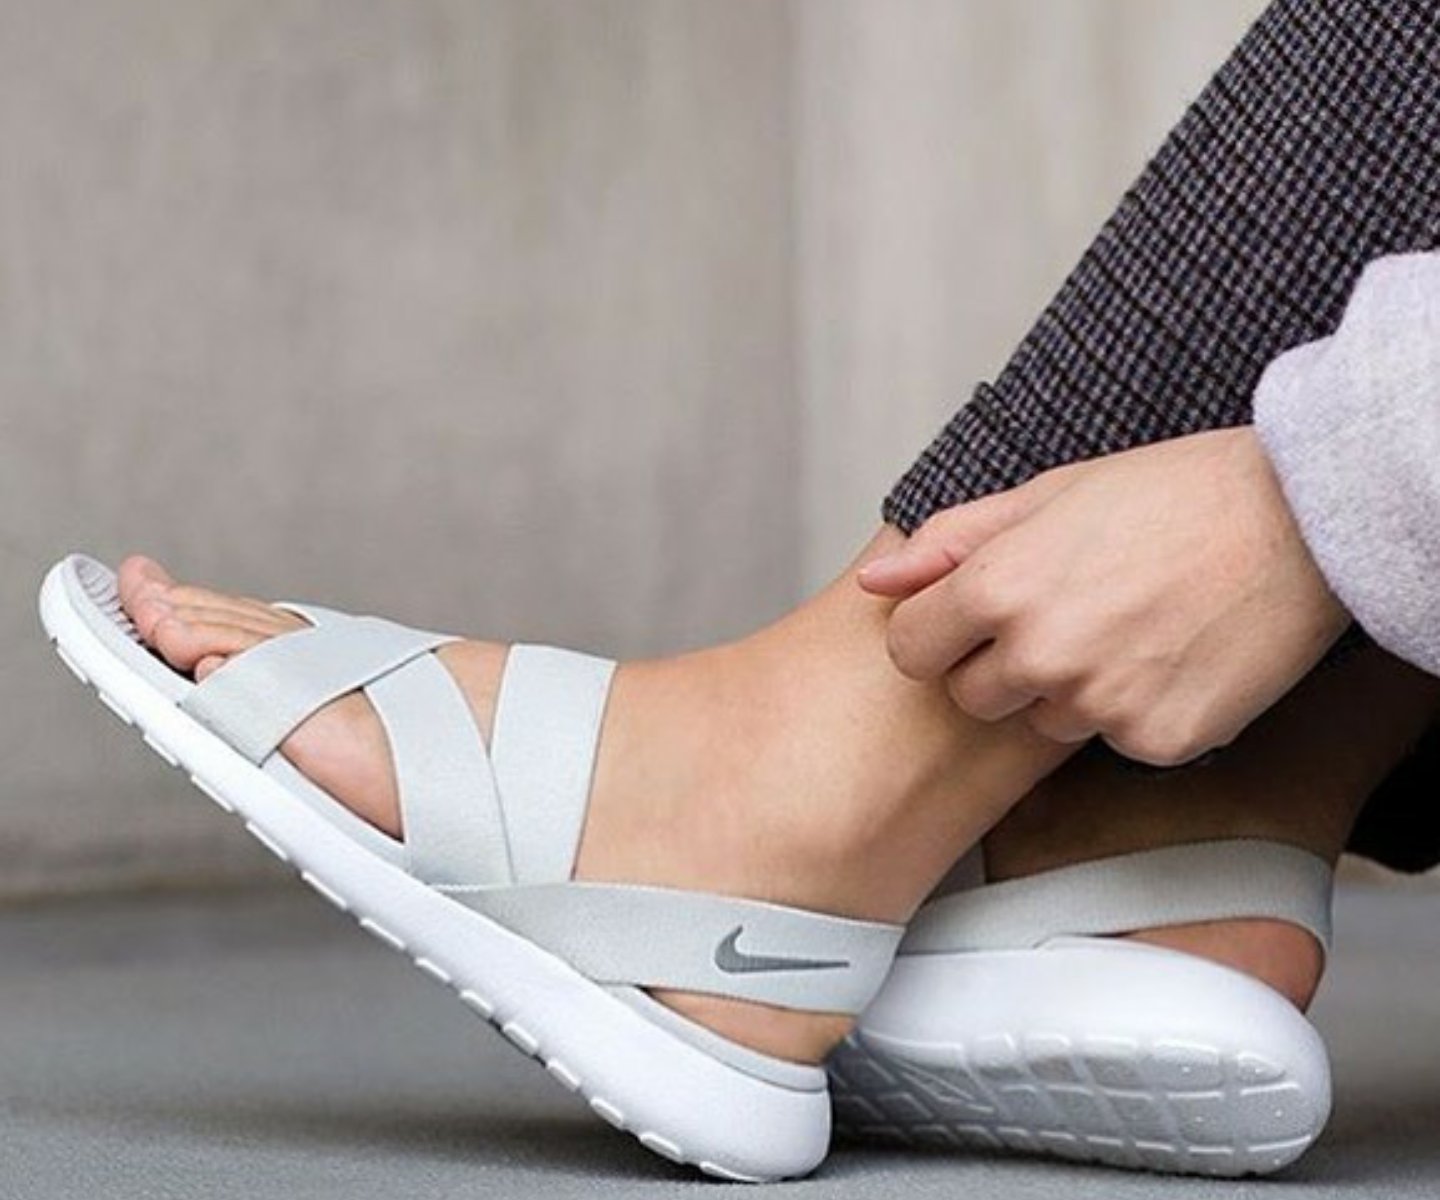 Ahnyoung_preorder Twitter: "Nike Roshe one Sandal Size: 23-26cm ราคา: 4,800฿ ส่งฟรี #AYproducts #มัดจำหรือผ่อนได้ https://t.co/uUdsZm0EBm" Twitter